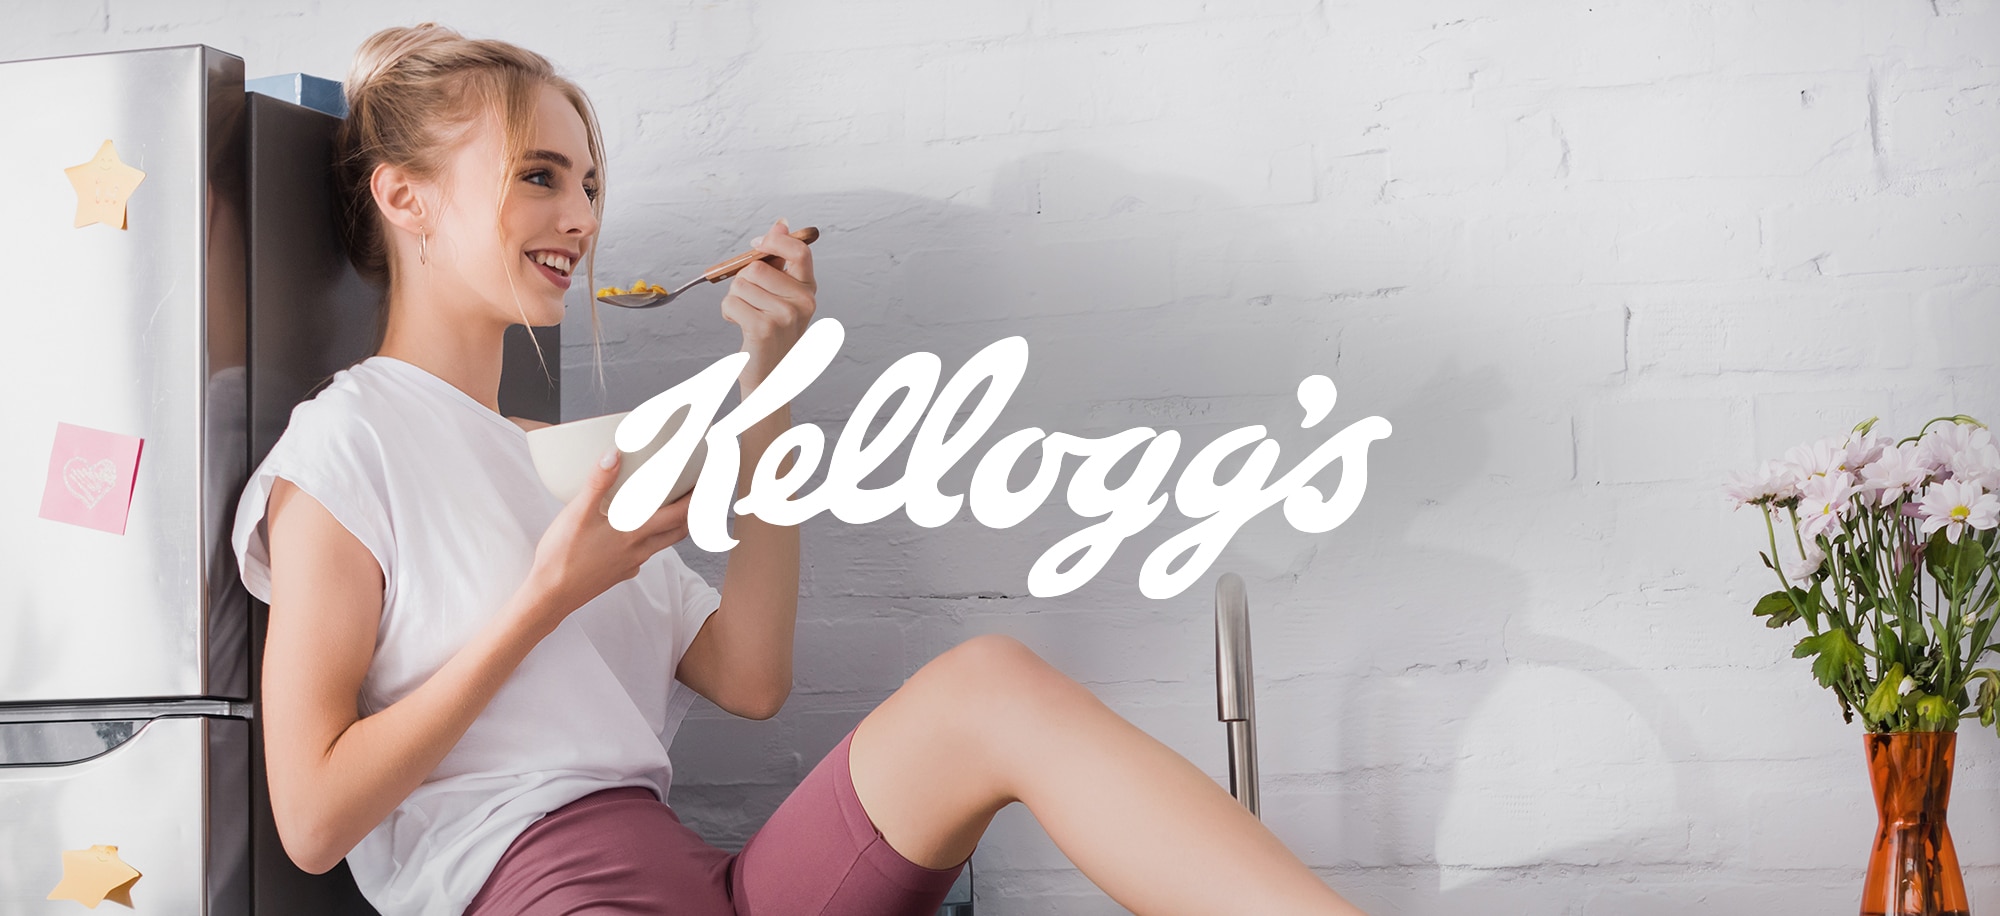 Kellogg’s democratizes insights with next-gen platform